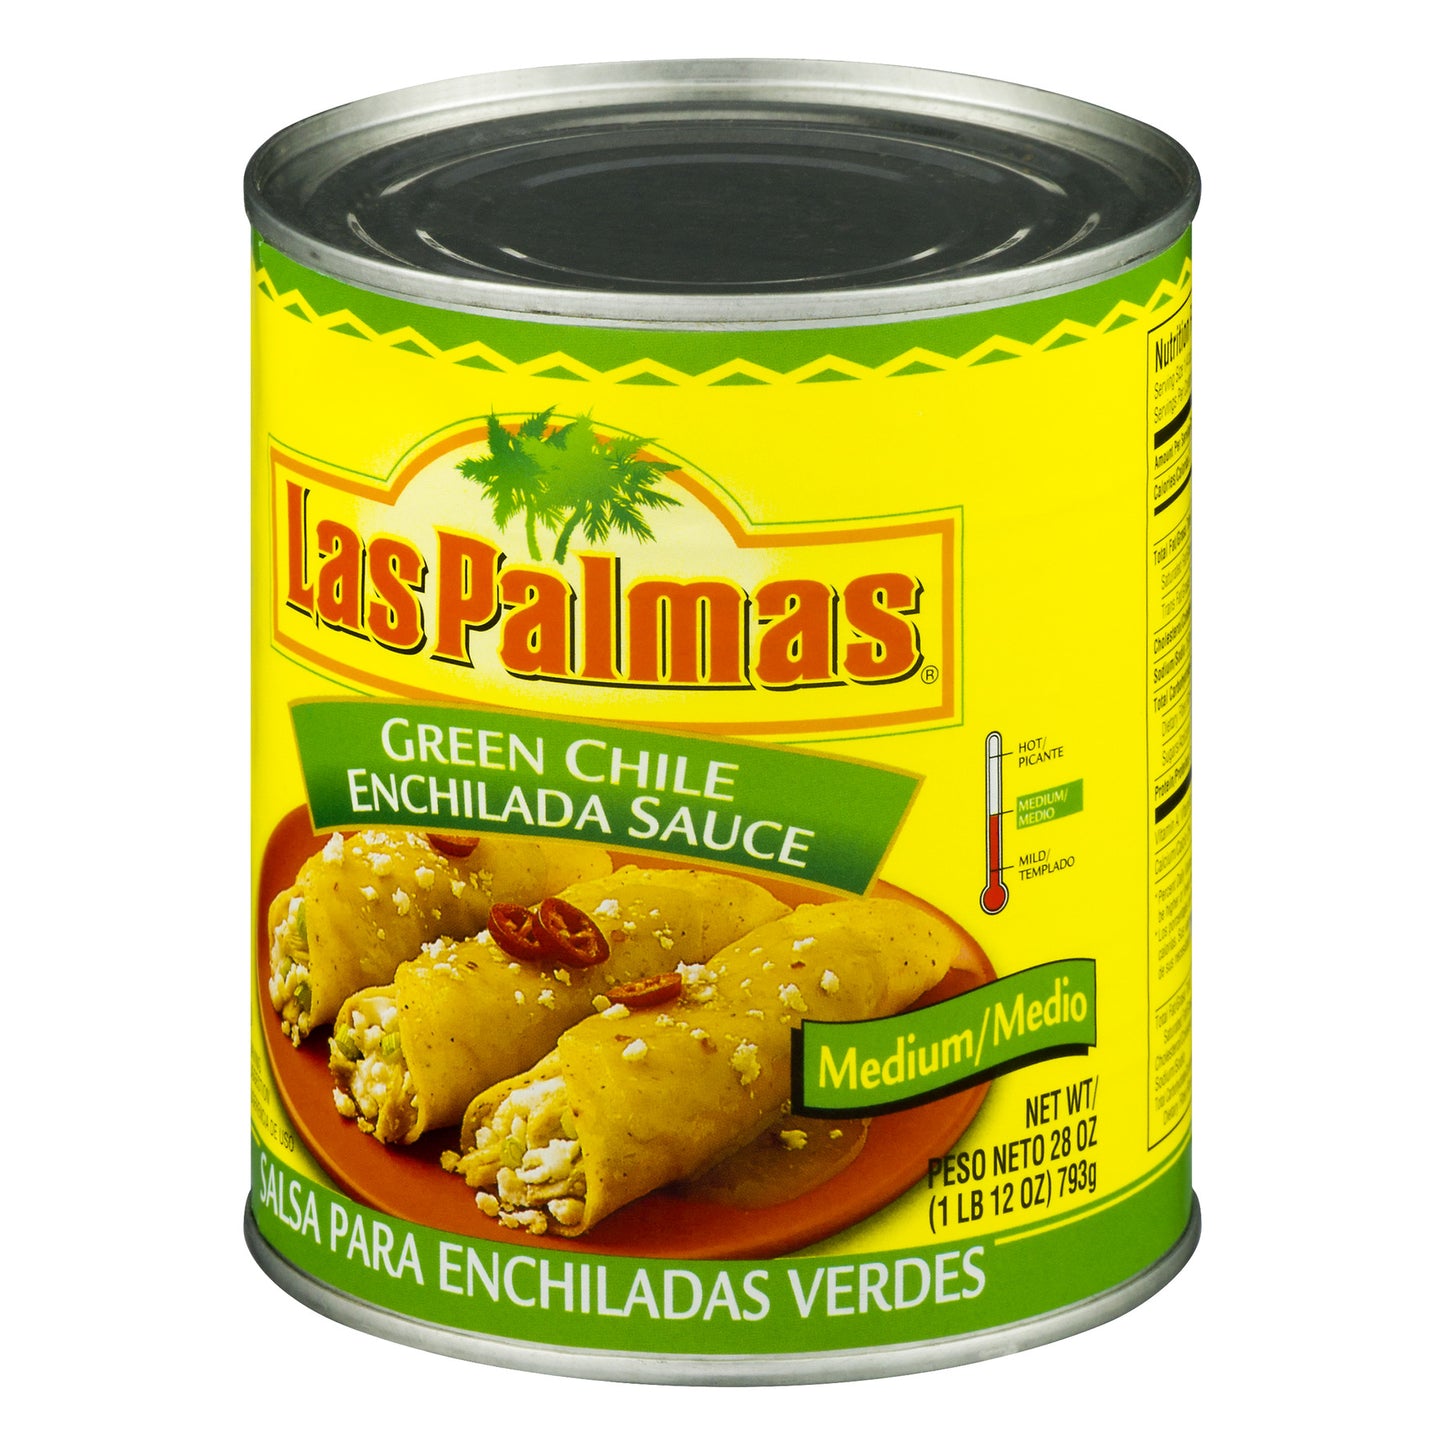 Las Palmas Medium Green Chile Enchilada Sauce, 28 oz